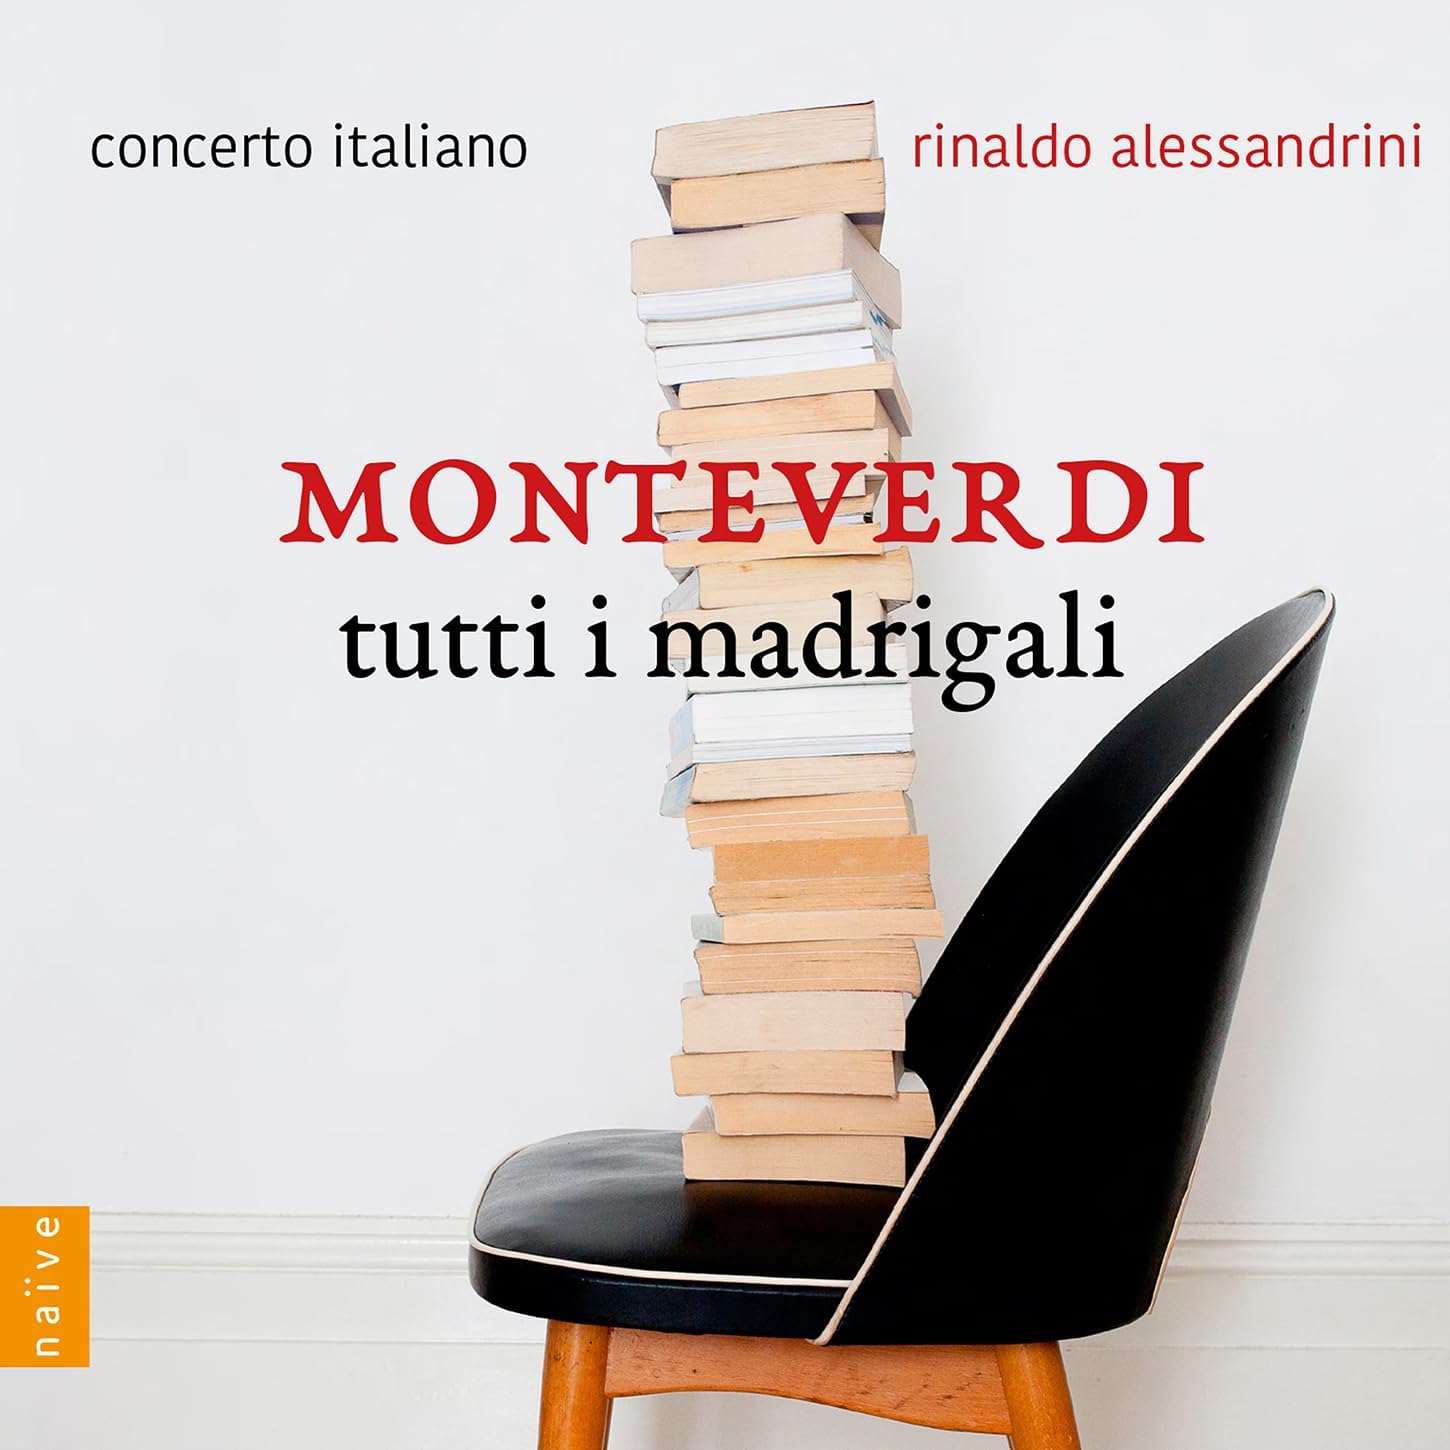 Monteverdi: tutti i madrigali – early music review